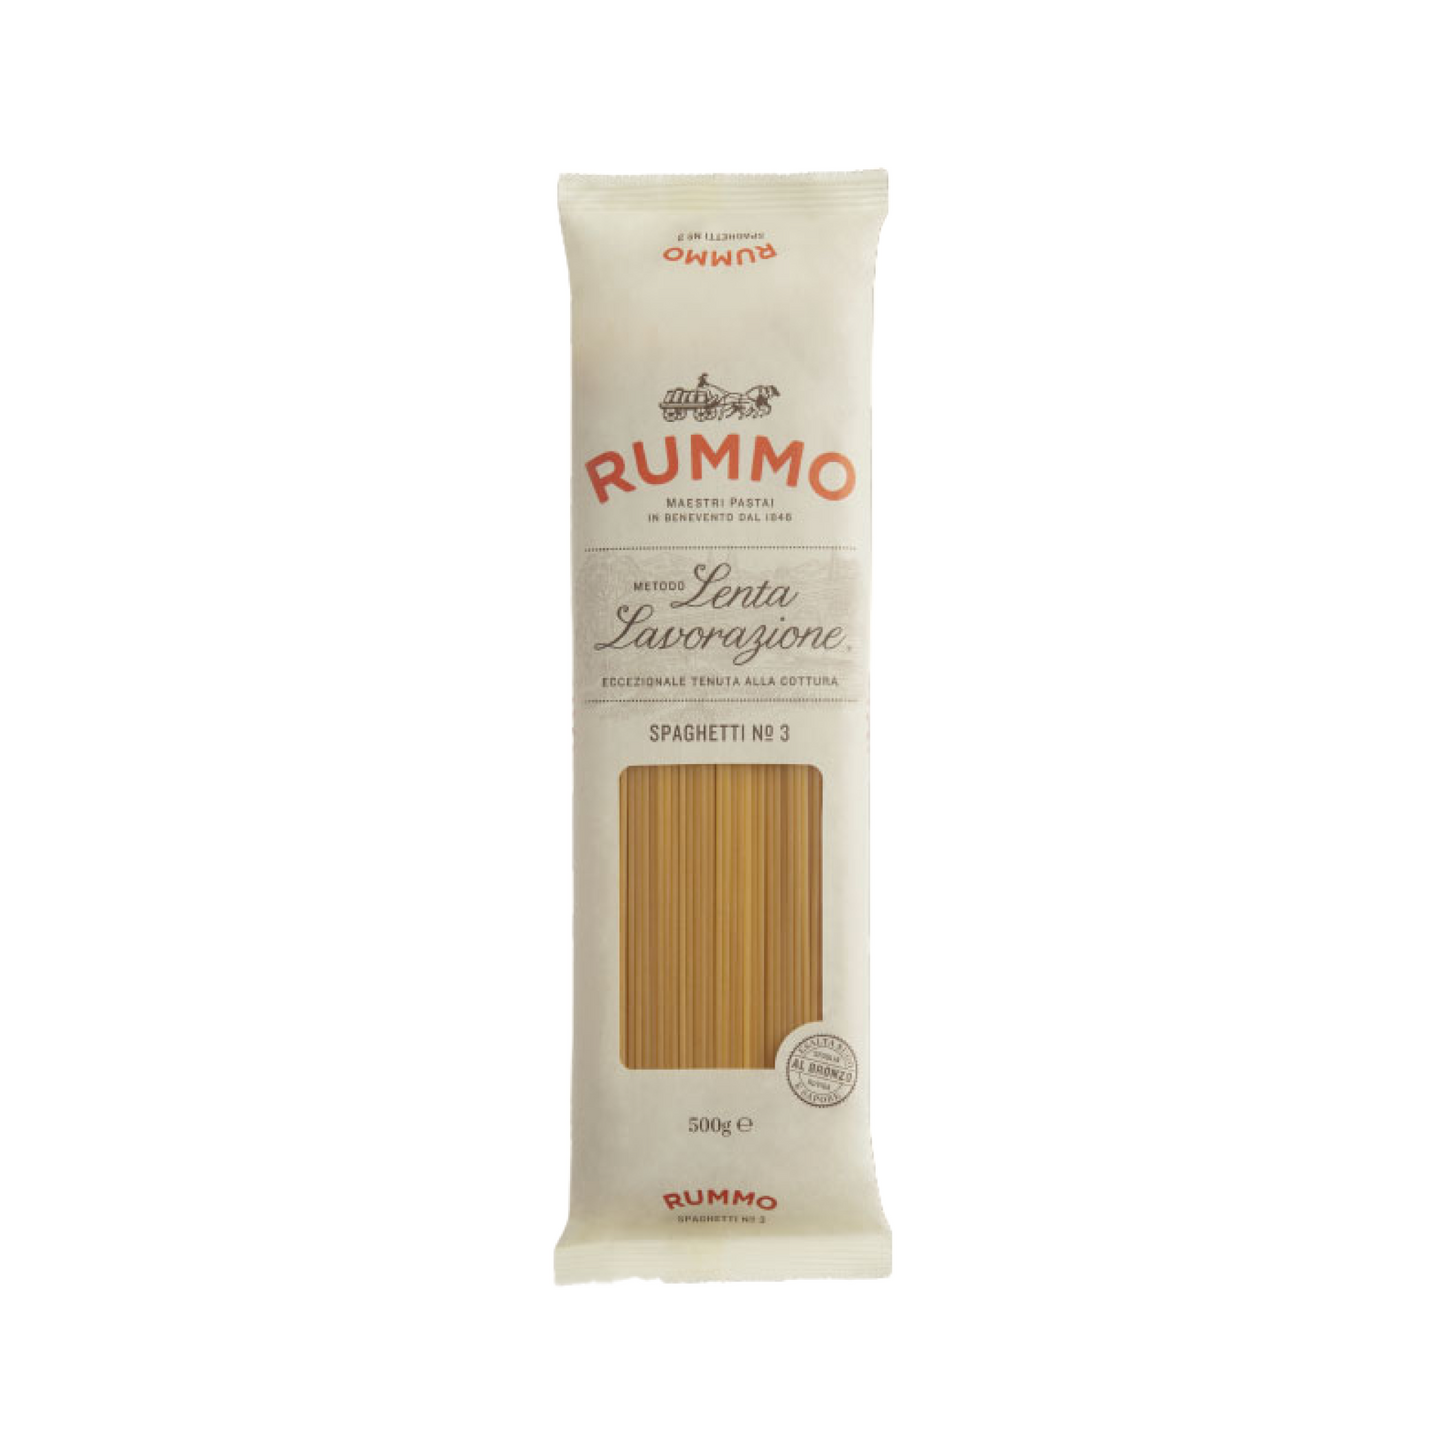 Rummo Spaghetti No. 3 500g